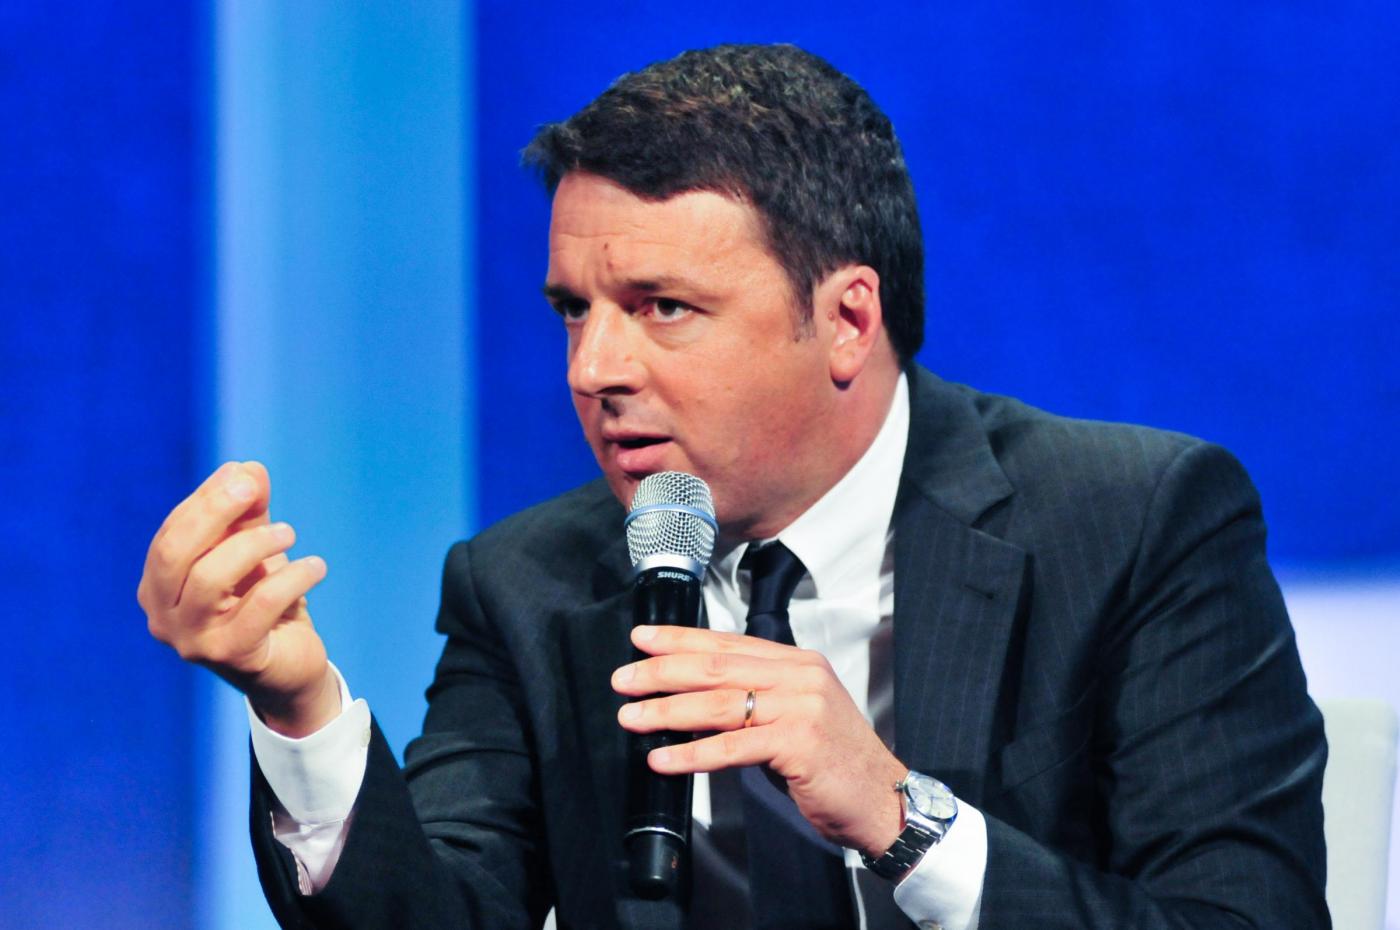 Matteo Renzi interviene alla Clinton Global Initiative 2016